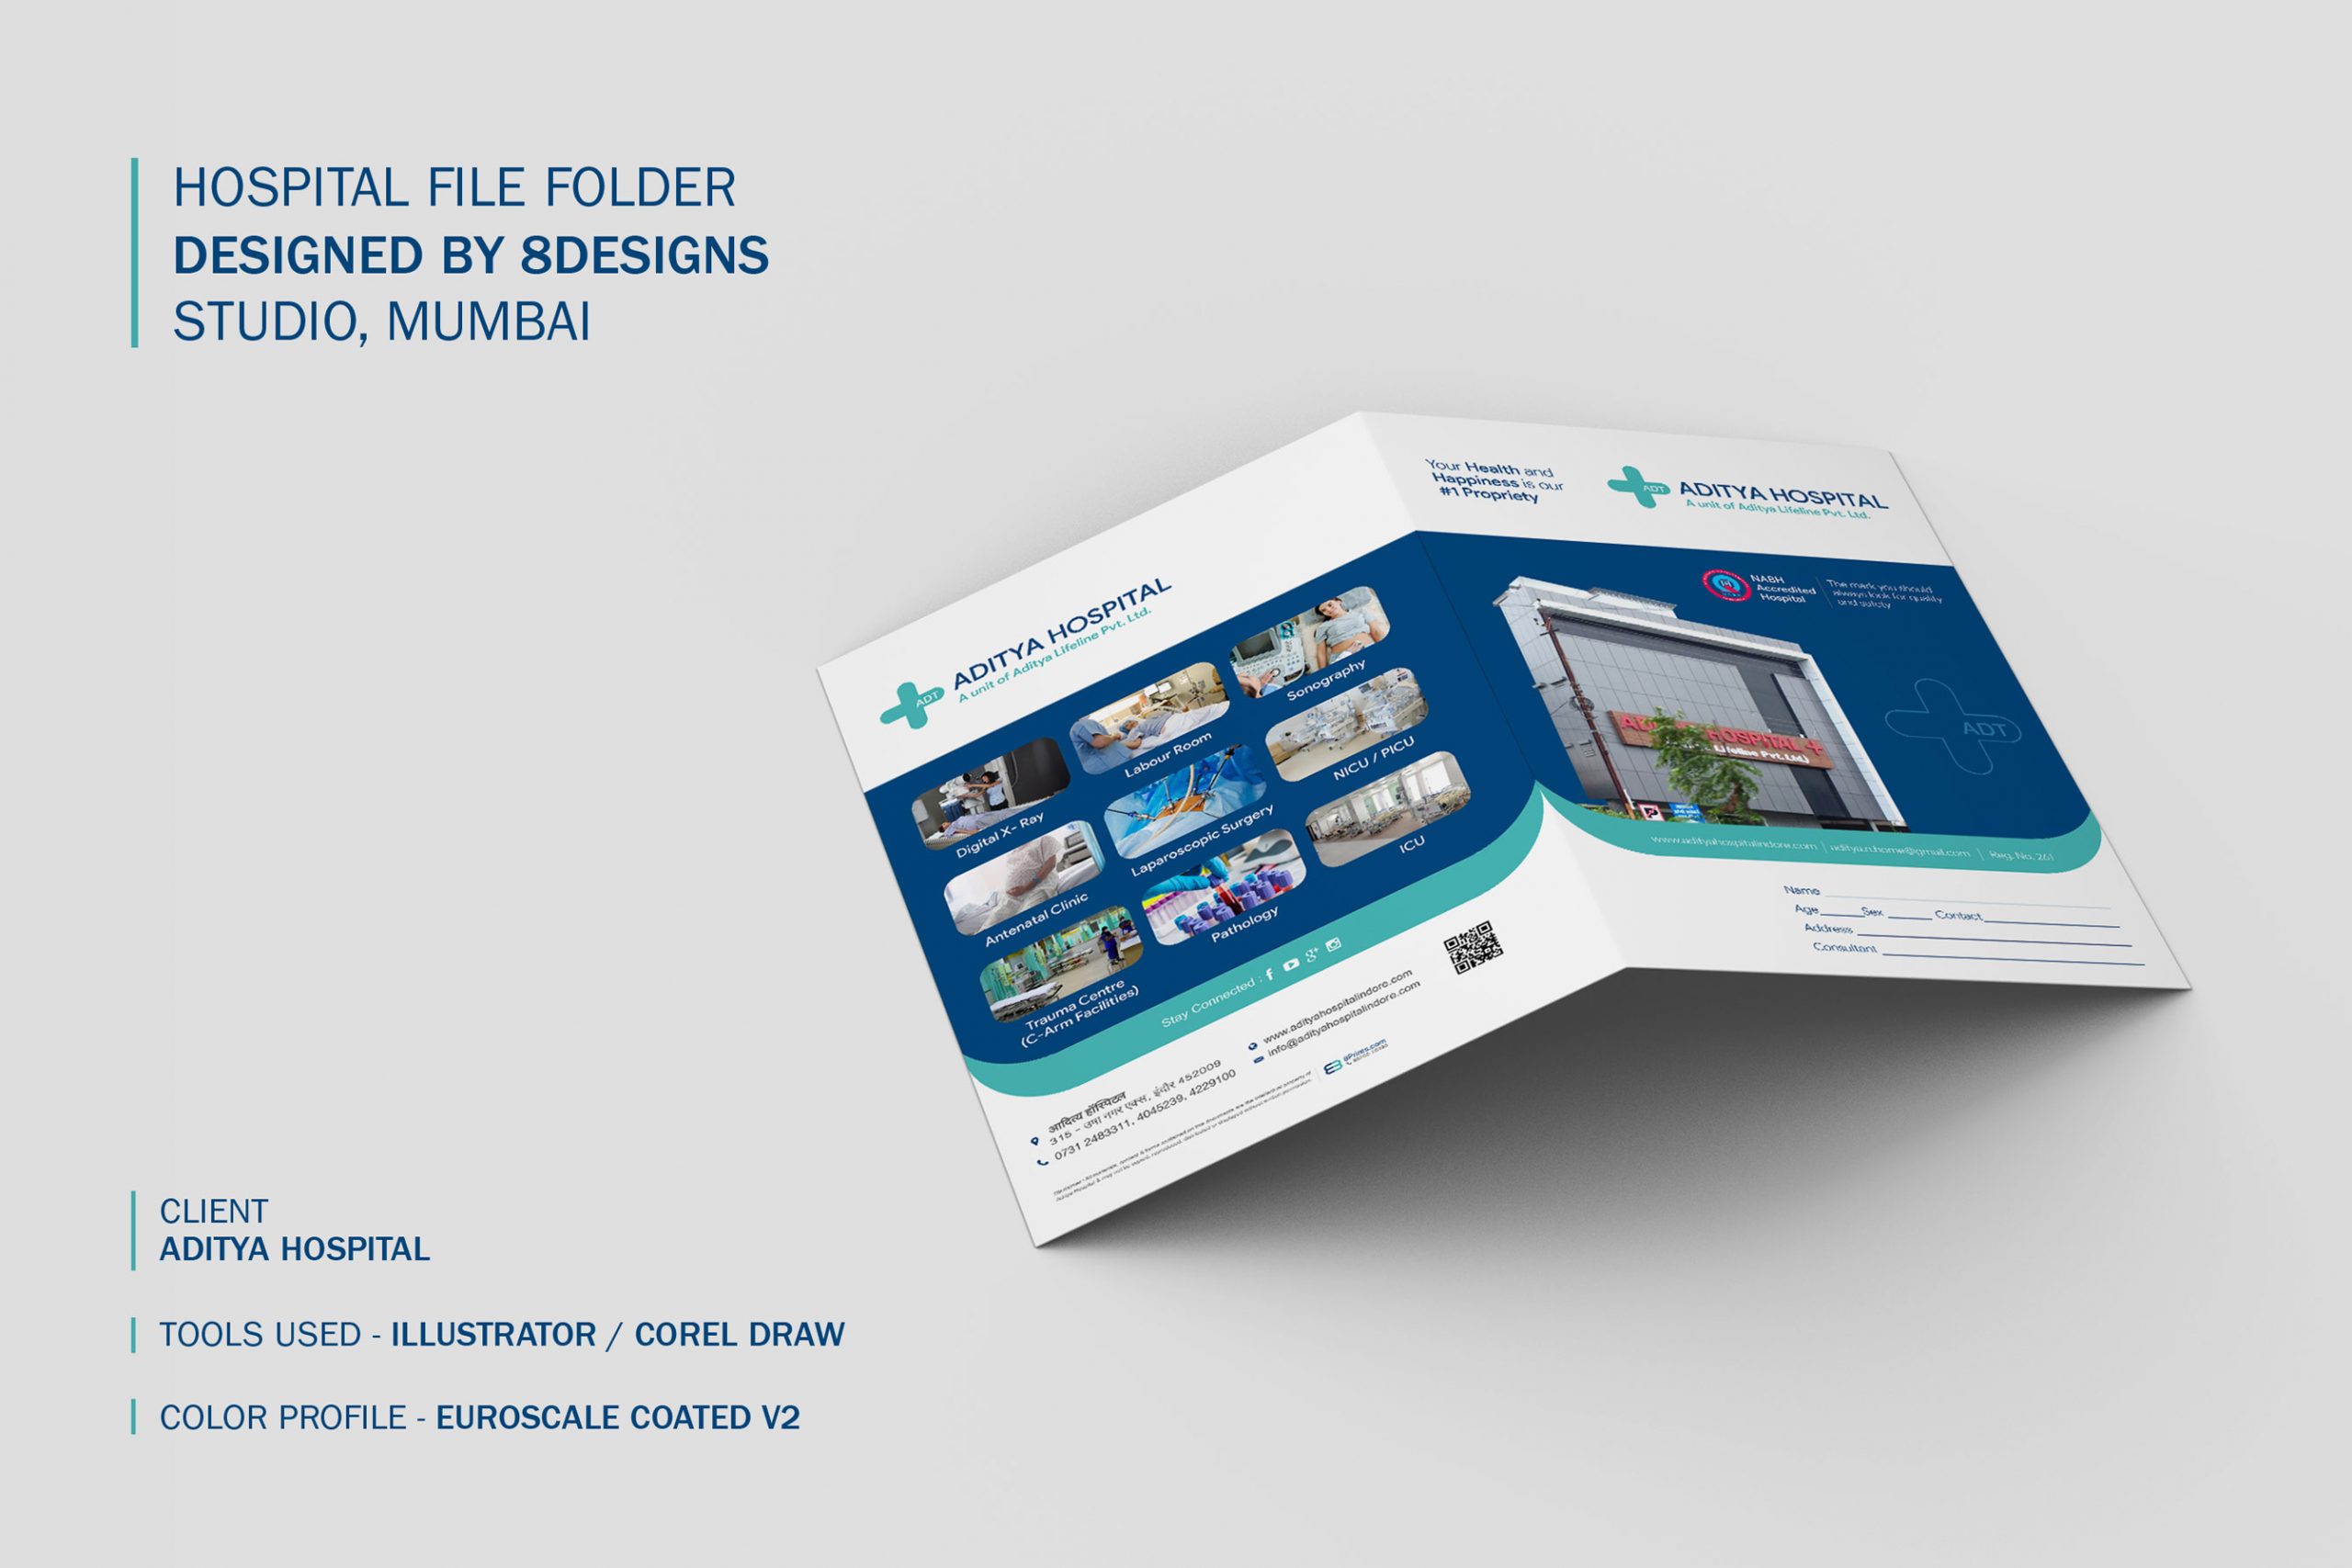 Hospital File Folder Design and Printing, Mumbai, India